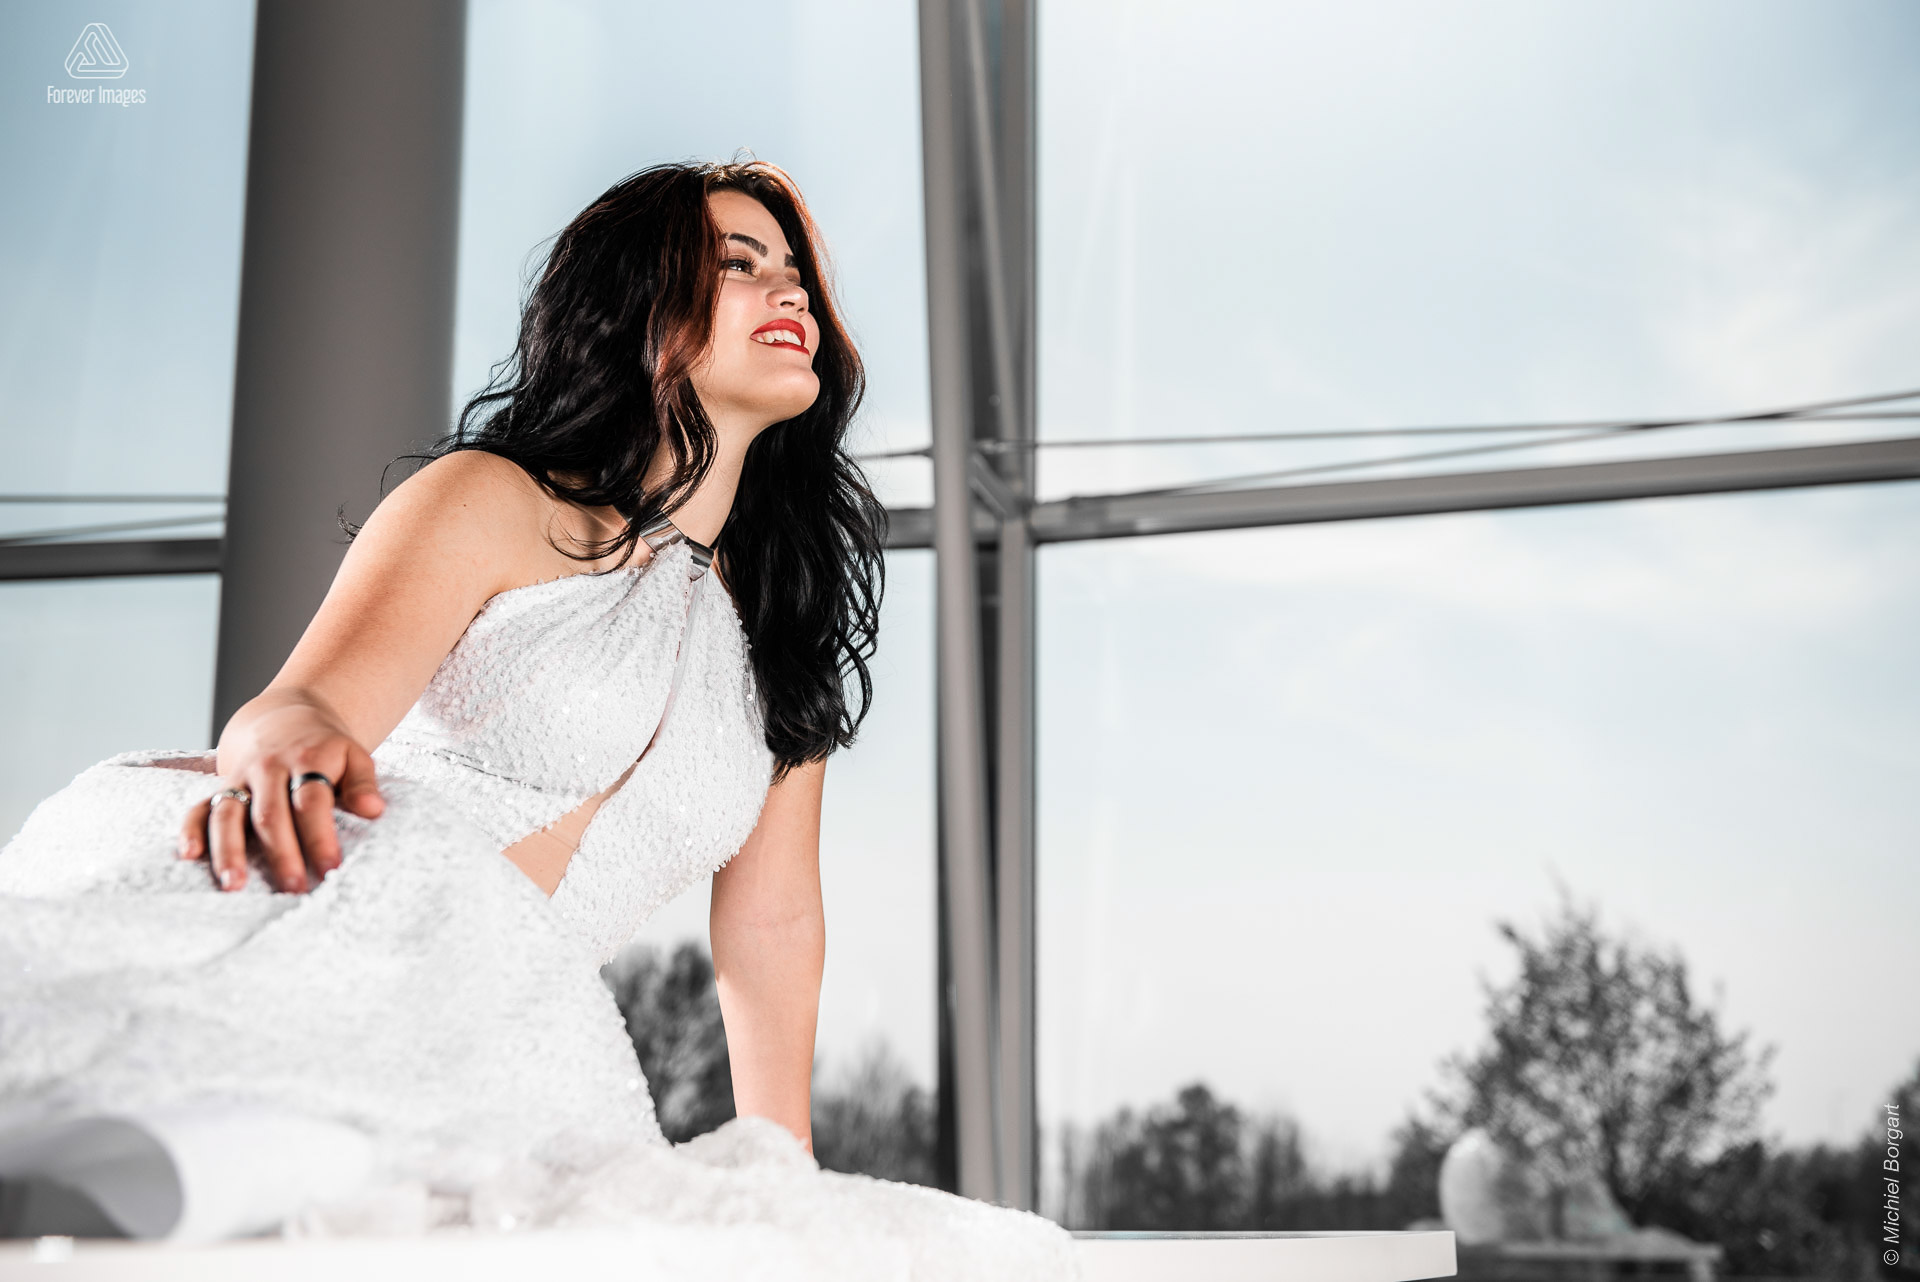 Fashionfoto portret dame witte jurk metale choker stralende lach | Daphna Akkermans David Cardenas | Fashionfotograaf Michiel Borgart - Forever Images.